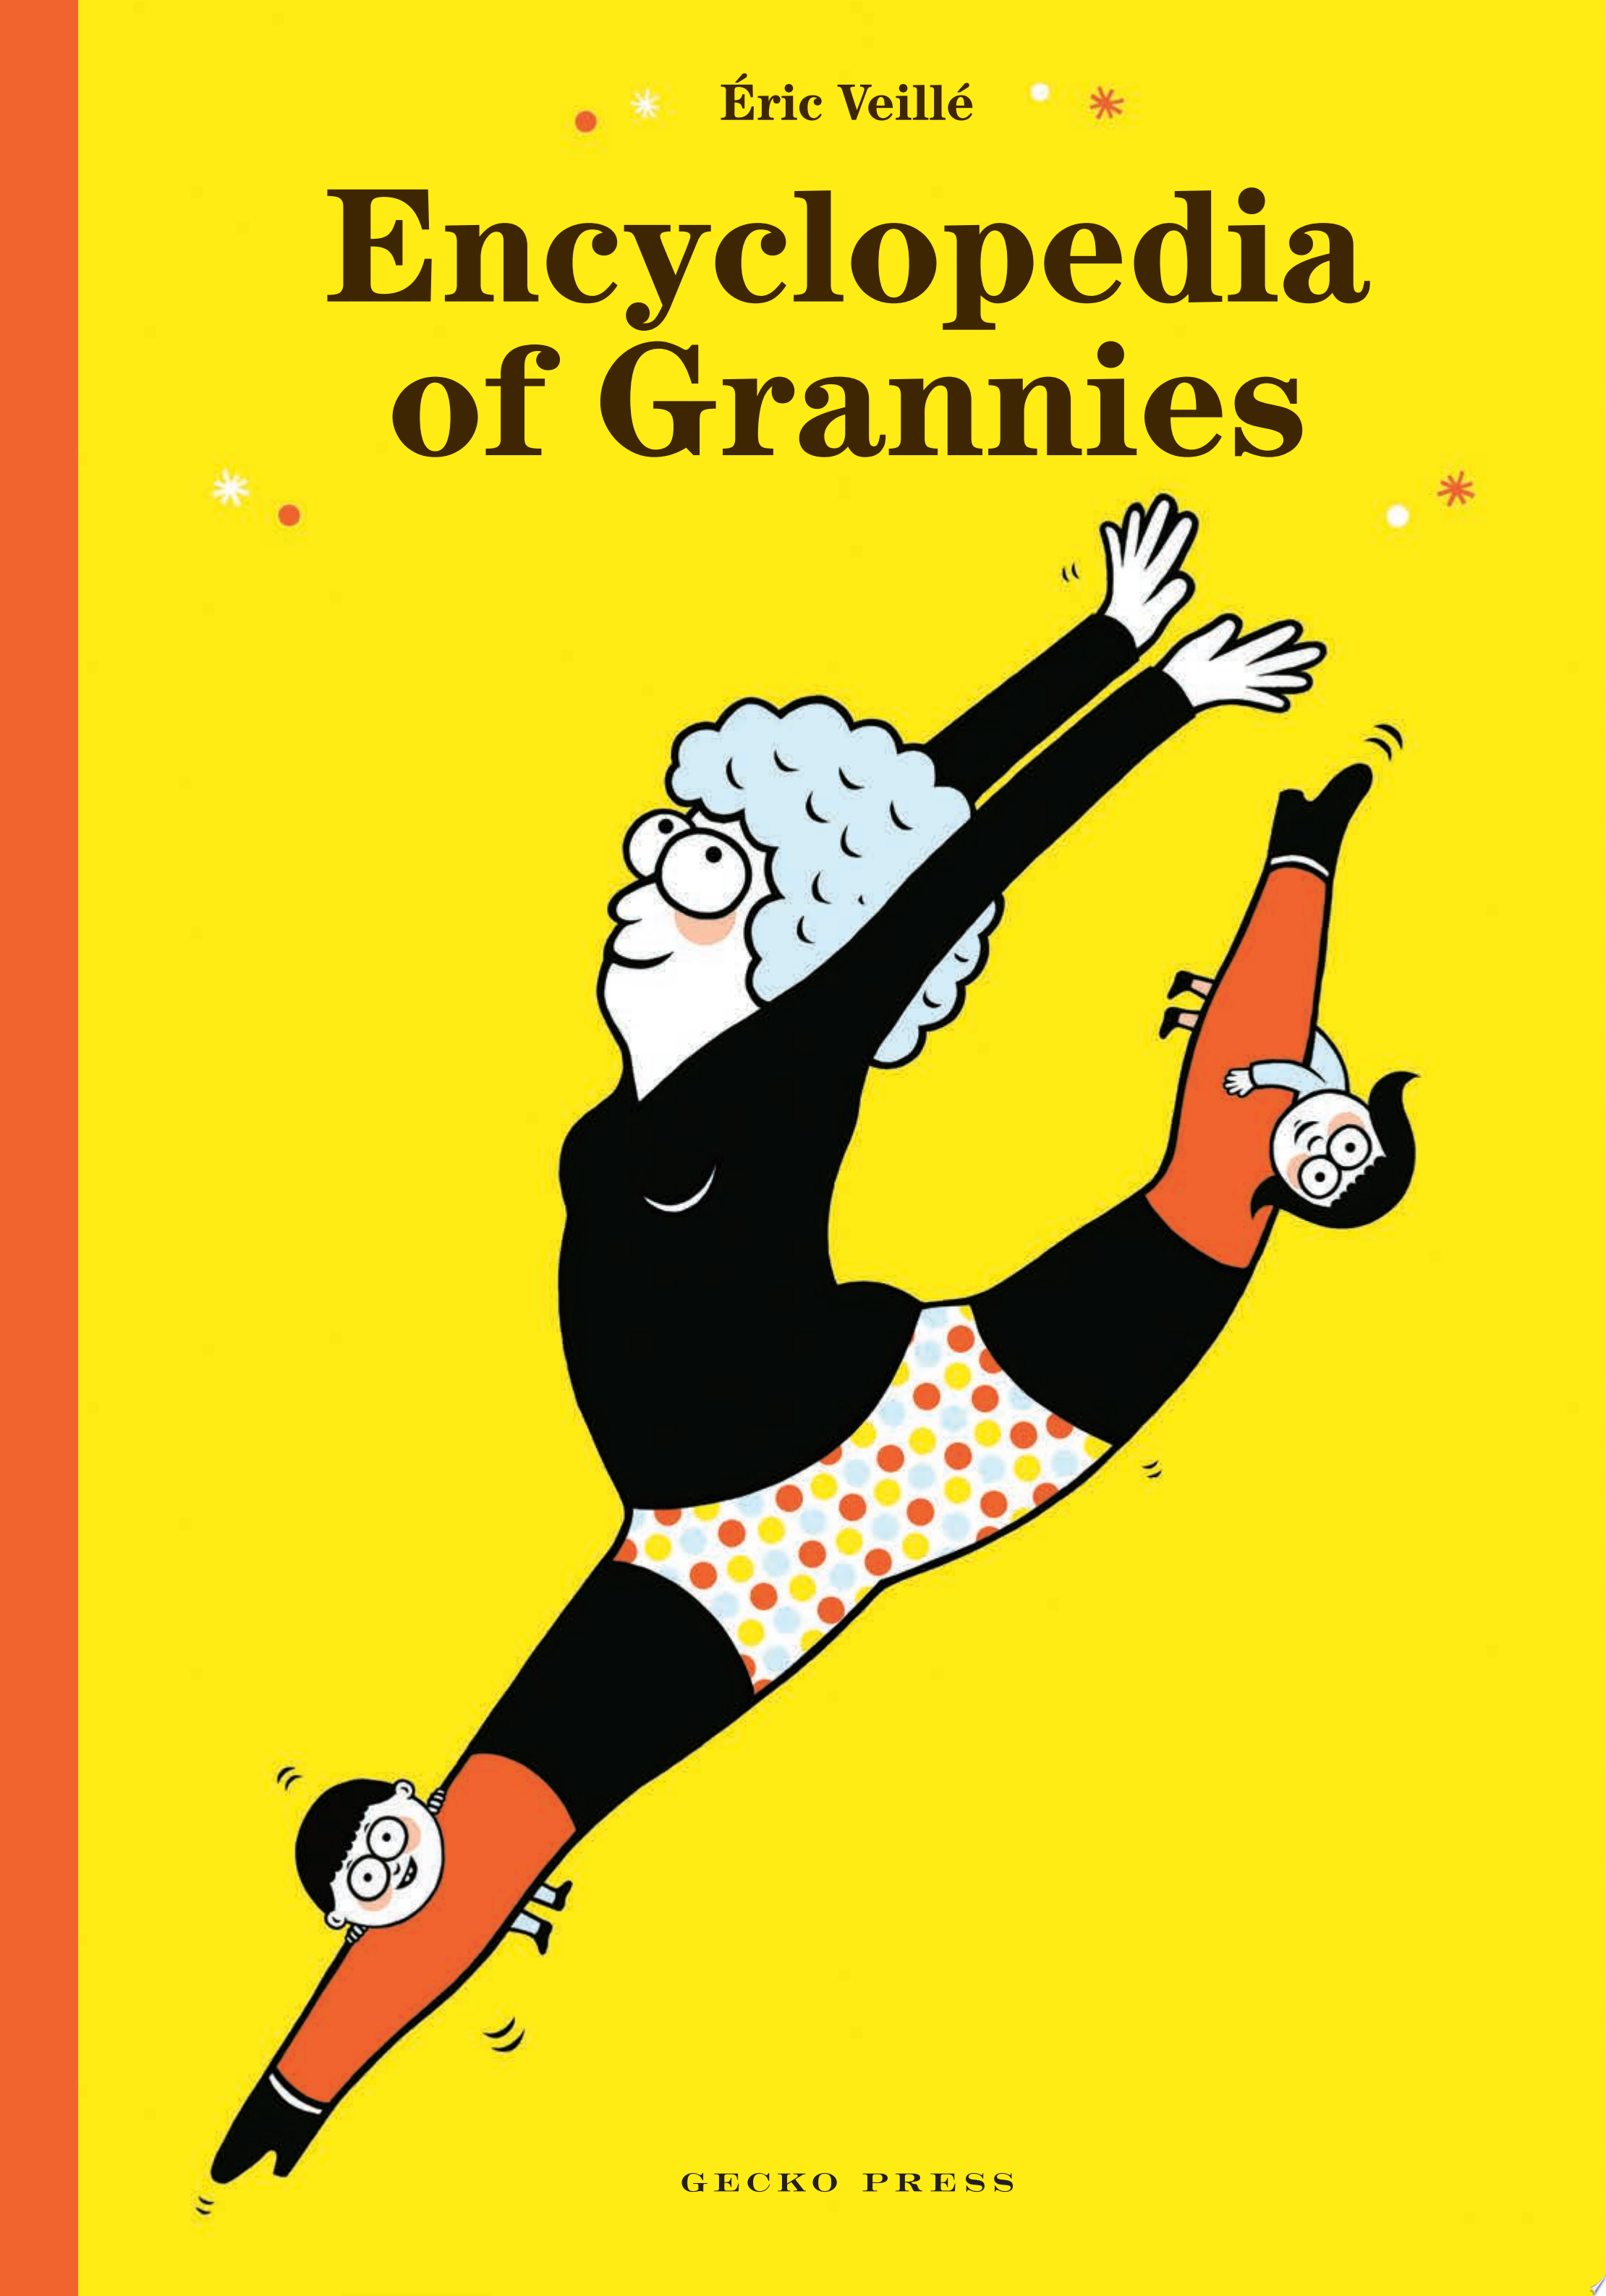 Image for "The Encyclopedia of Grandmas"